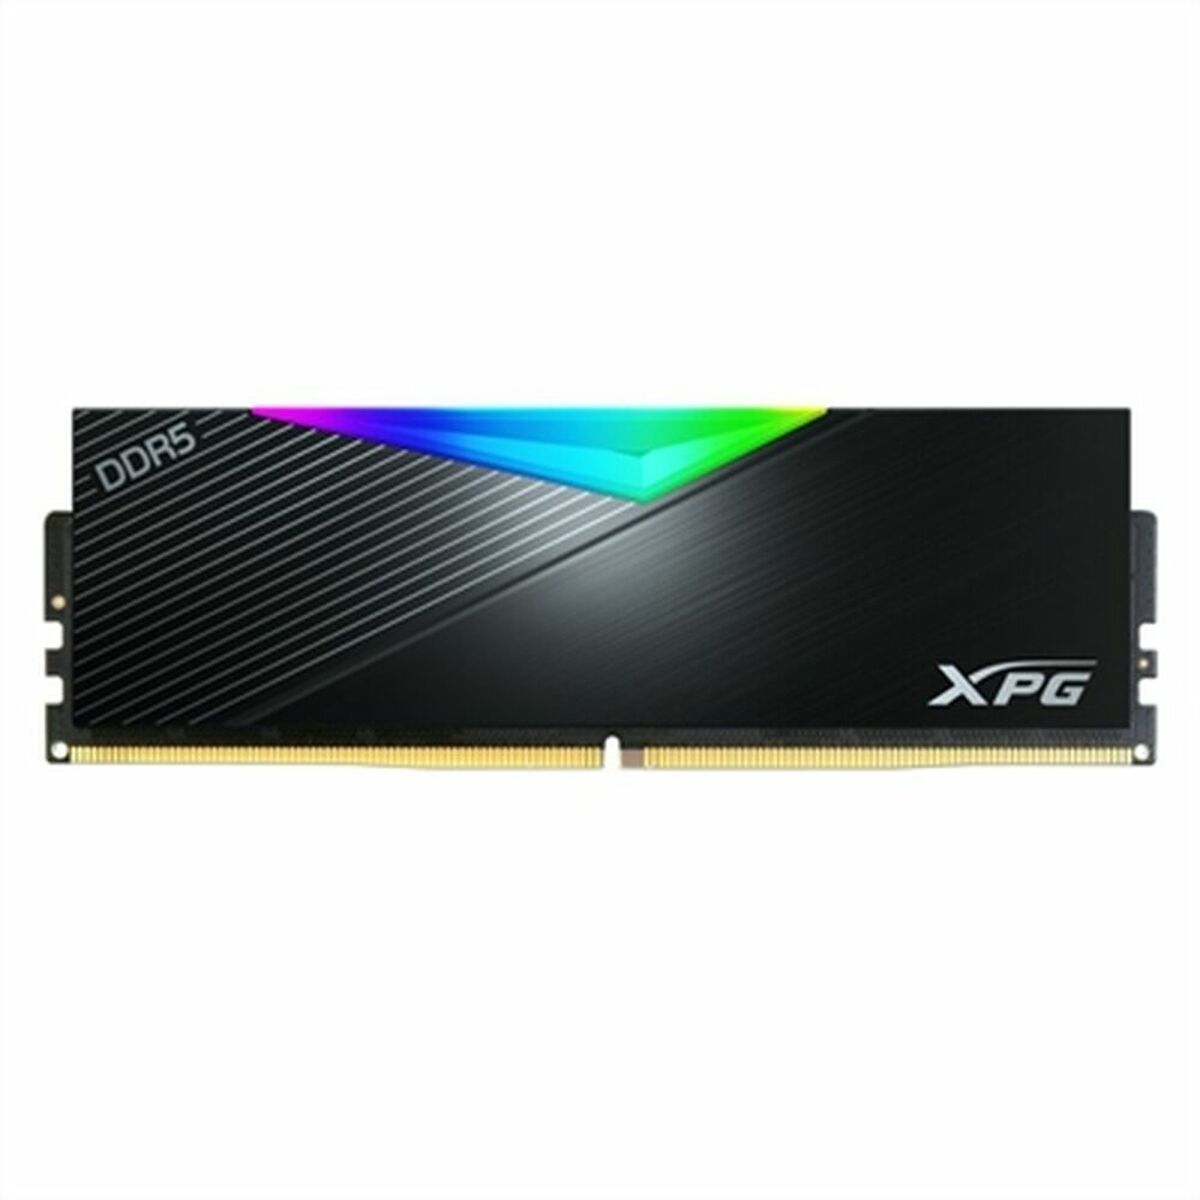 Osta tuote RAM-muisti Adata XPG Lancer CL38 RGB 16 GB DDR5 5200 MHZ 16 GB verkkokaupastamme Korhone: Tietokoneet & Elektroniikka 10% alennuksella koodilla KORHONE